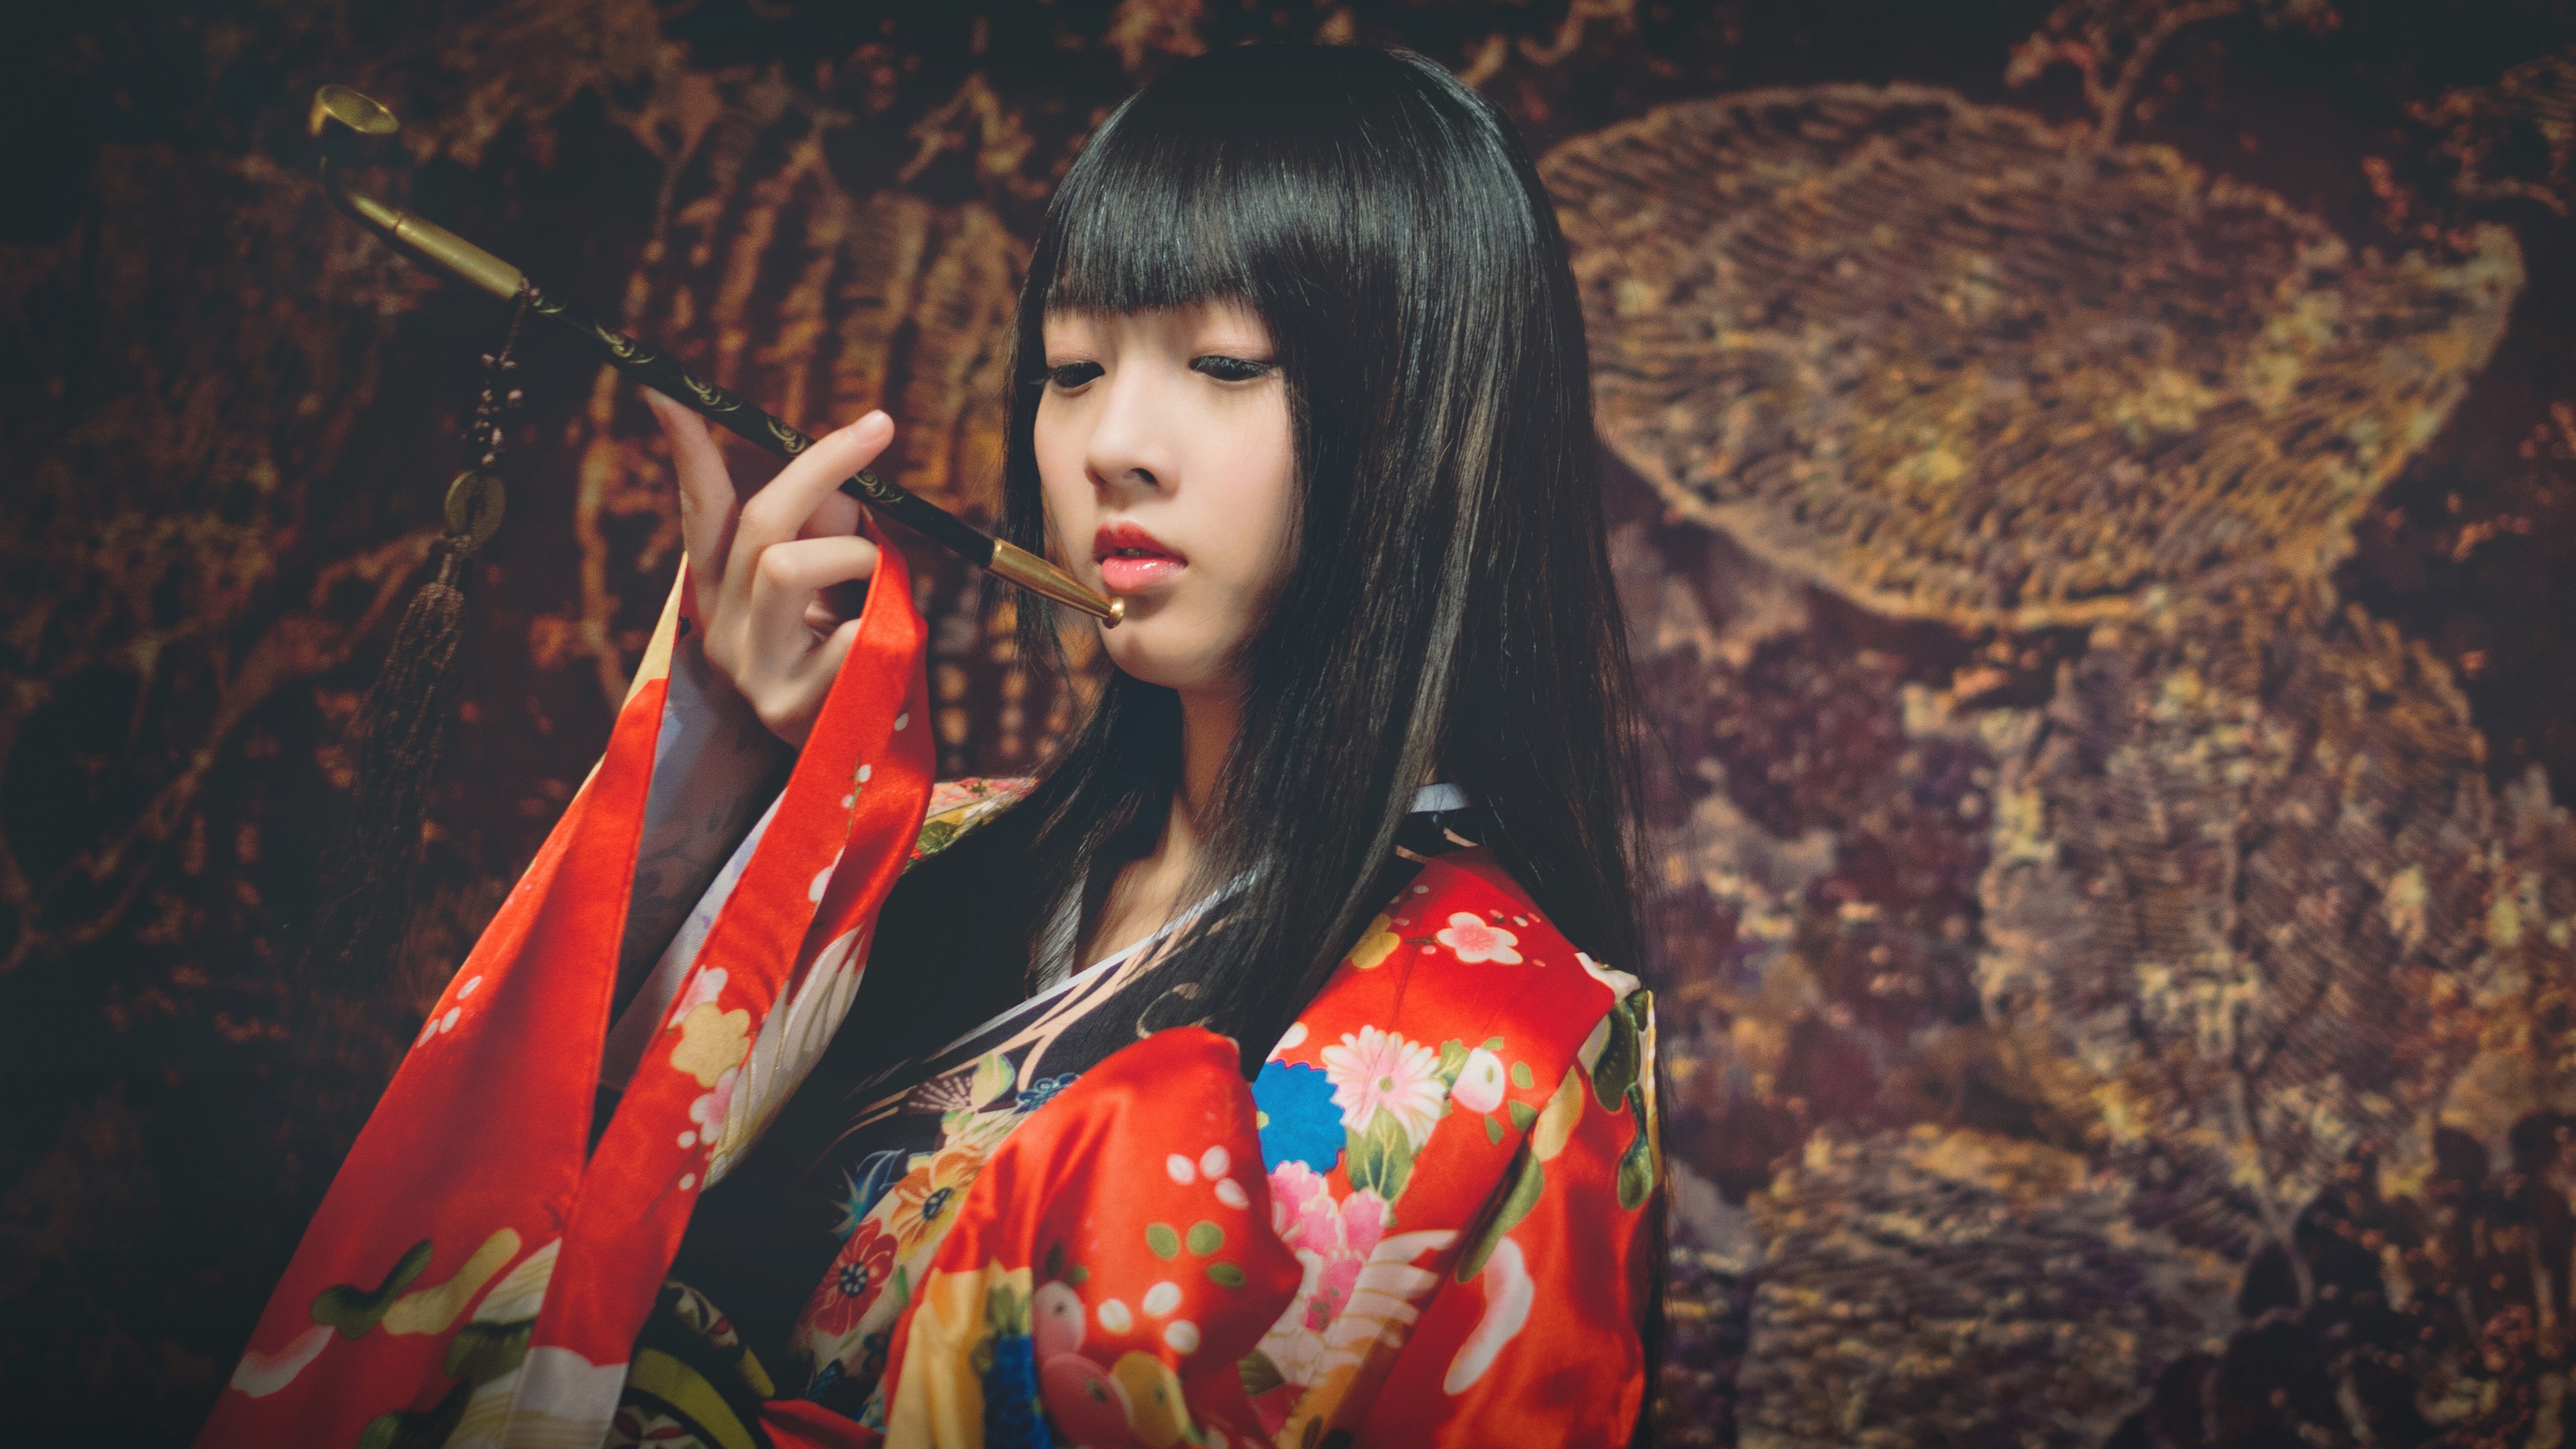 Wallpaper Japanese girl, kimono dress, smoking 3840x2160 UHD 4K Picture, Image